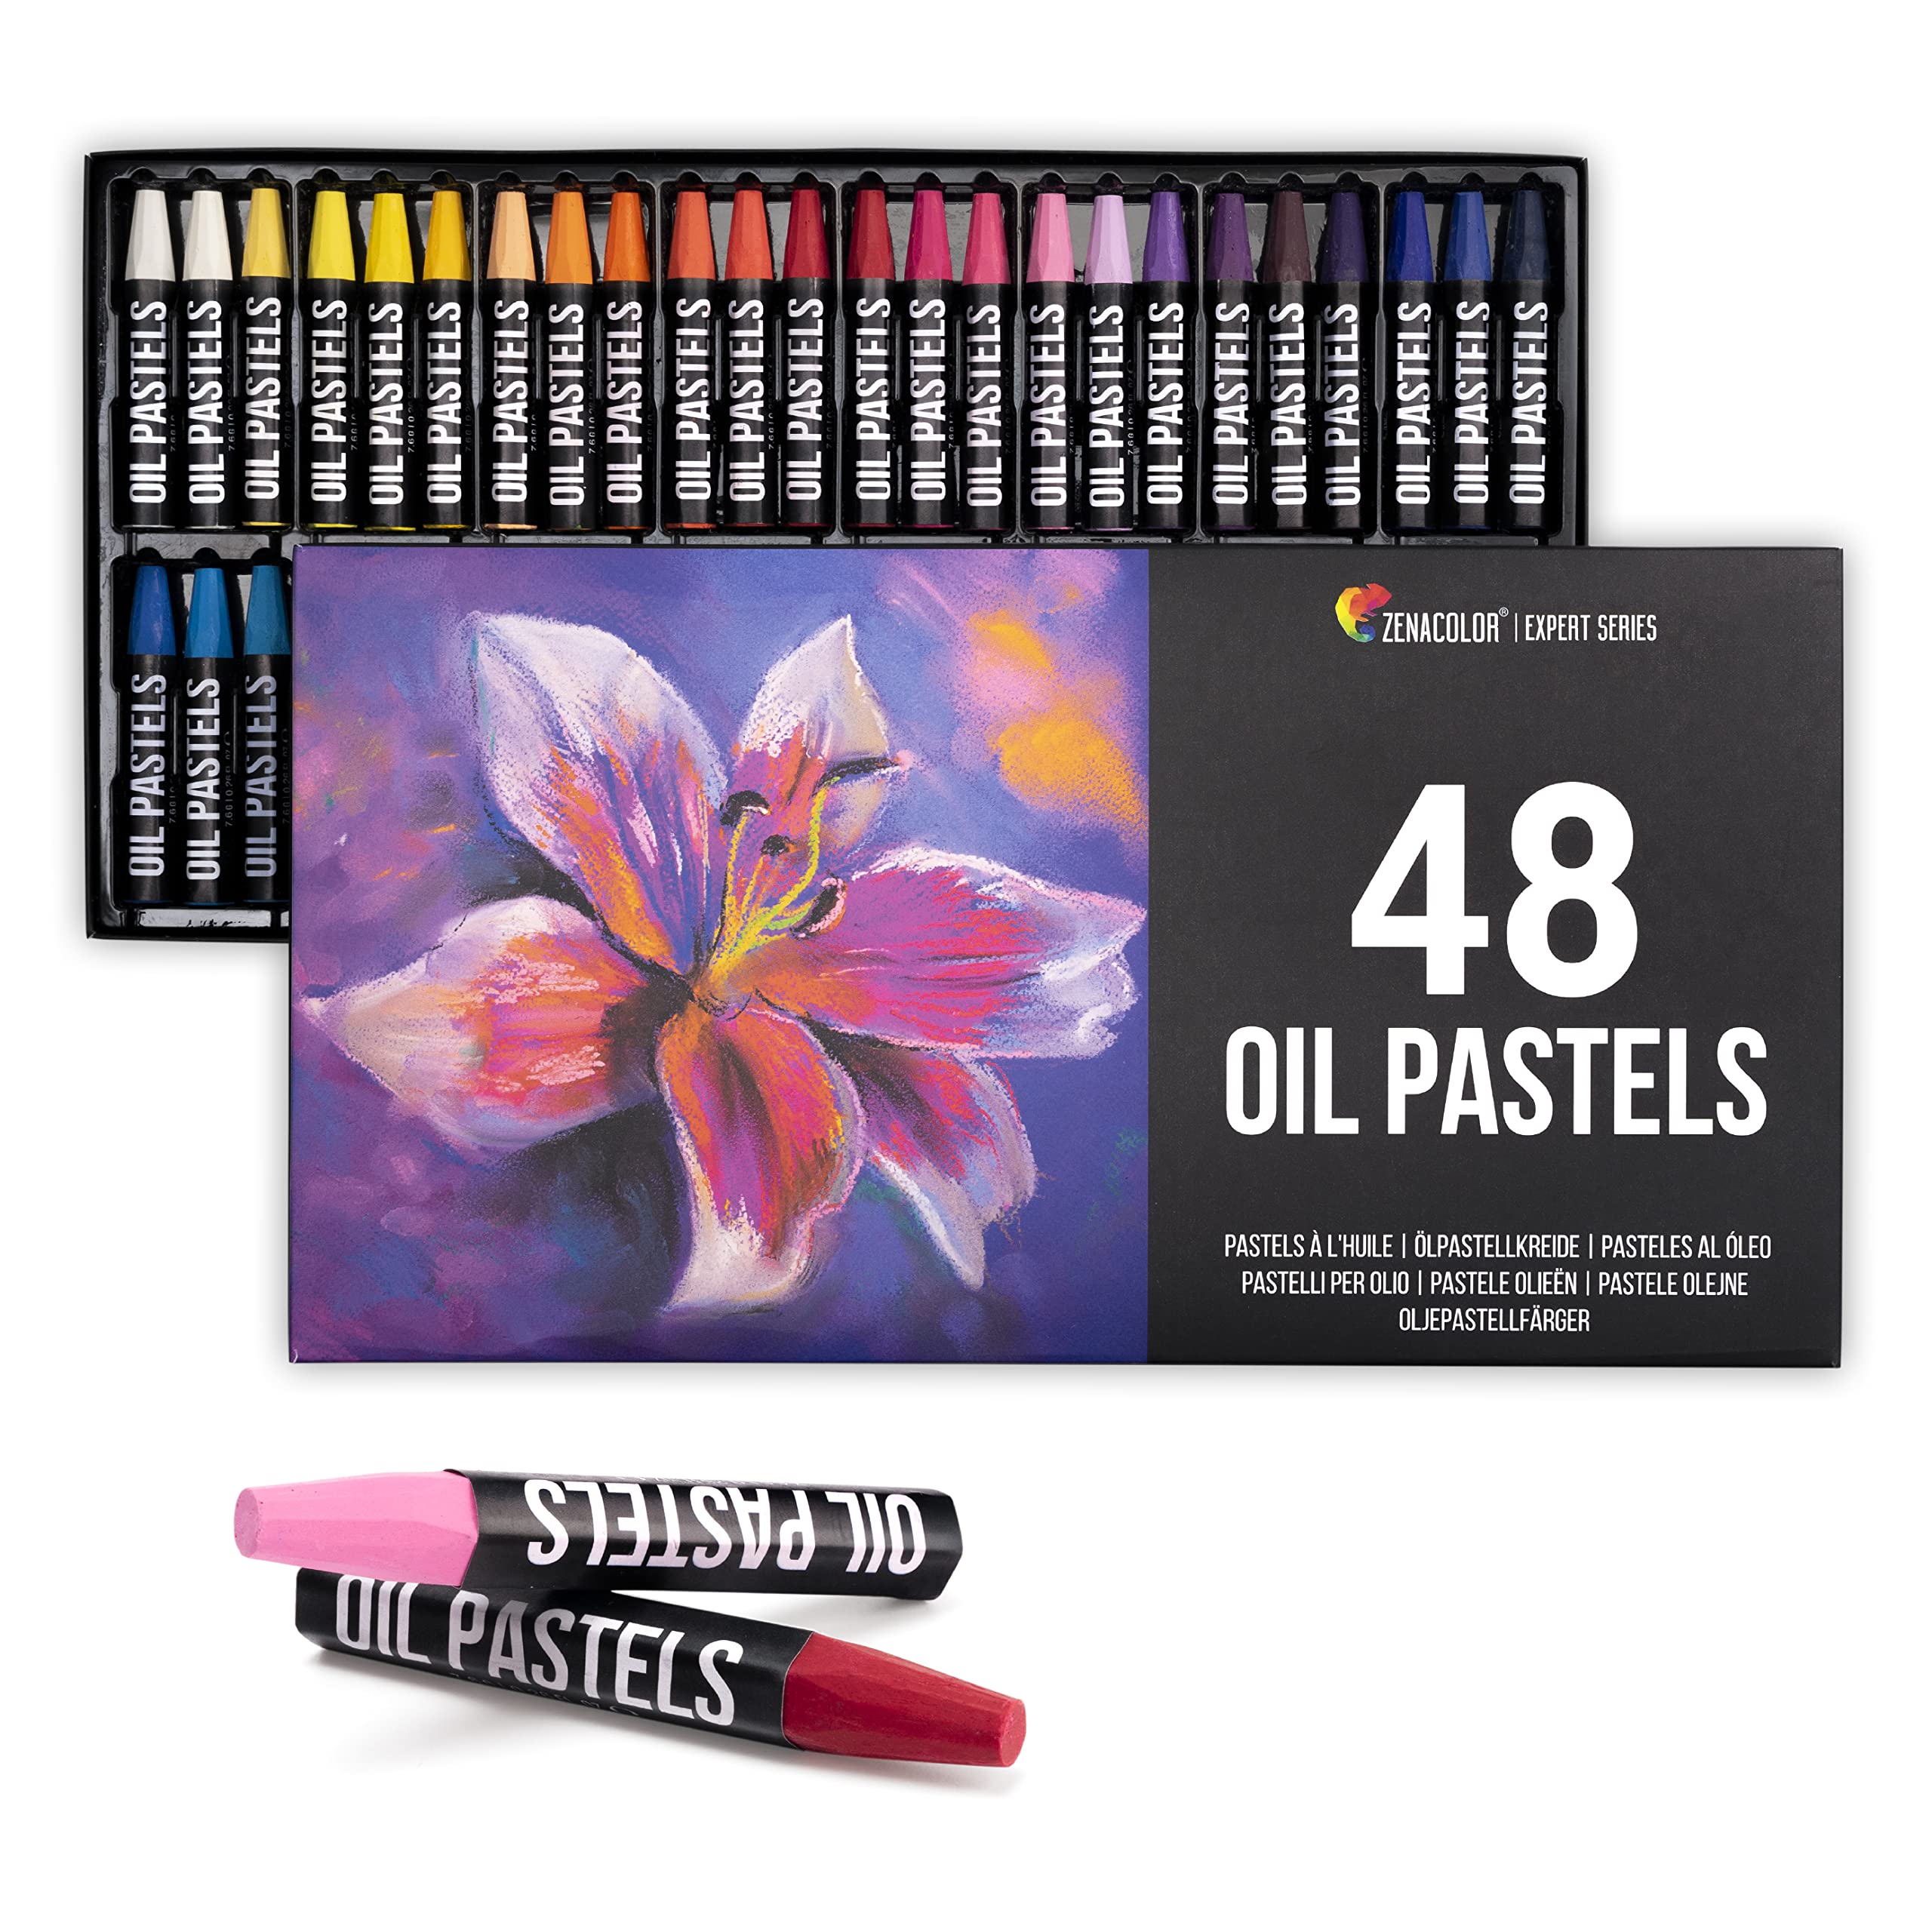 Zenacolor Oil Pastels for Artists (Set of 48) - pastel oil pastels for kids  - High-Pigment Water-Resistant Oil Pastel Colors - Soft Texture No Residue  - Art Supplies for Artists